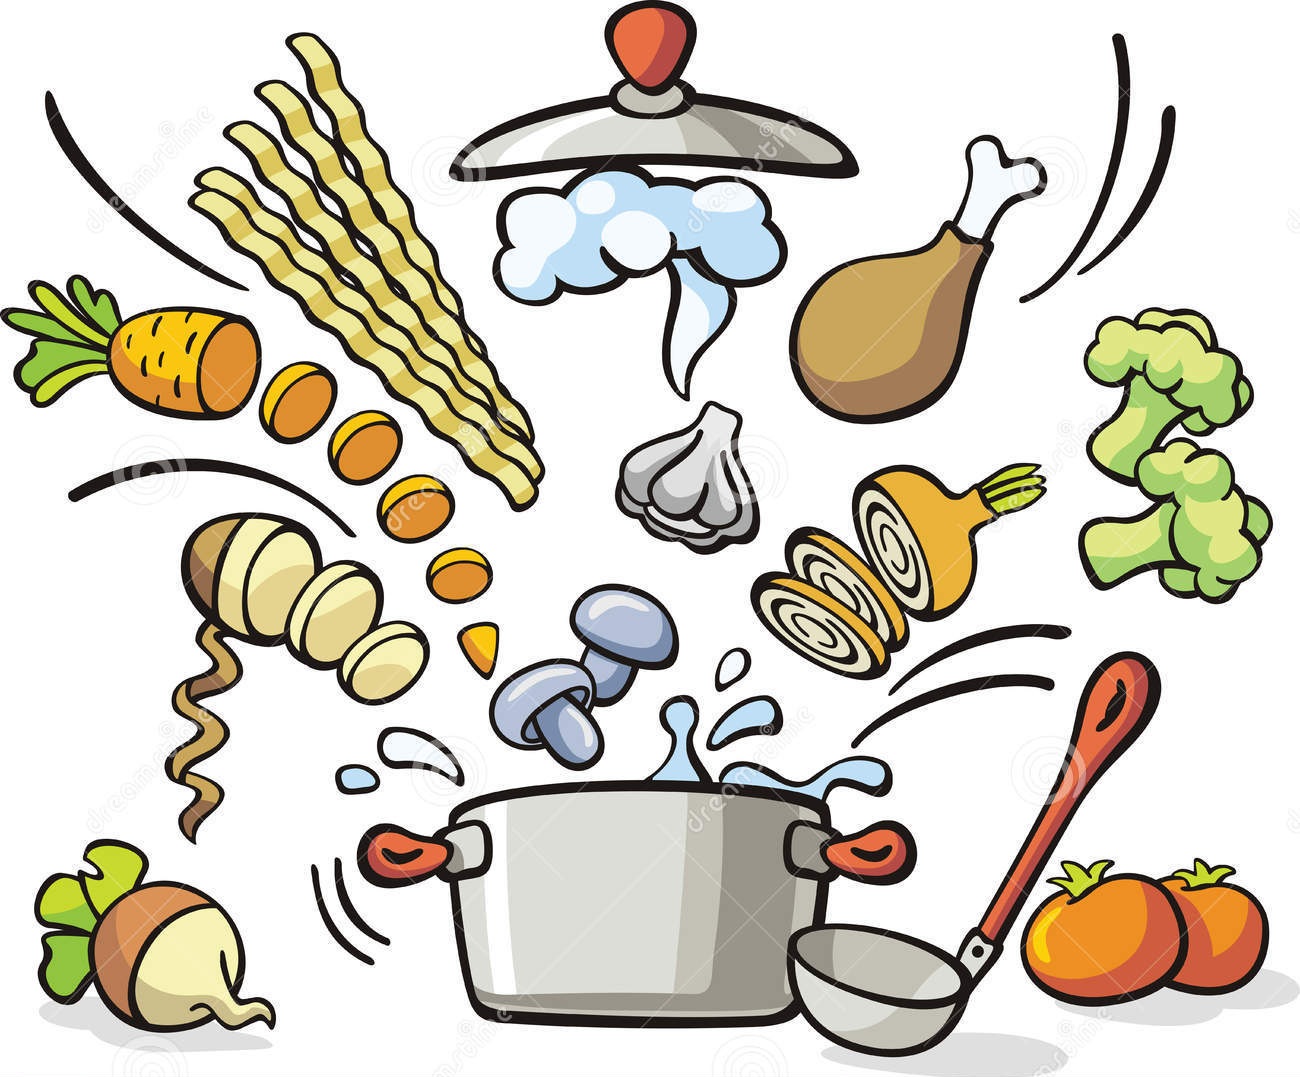 http://www.dreamstime.com/royalty-free-stock-image-vector-illustration-pan-vegetables-soup-preparation-image30206326